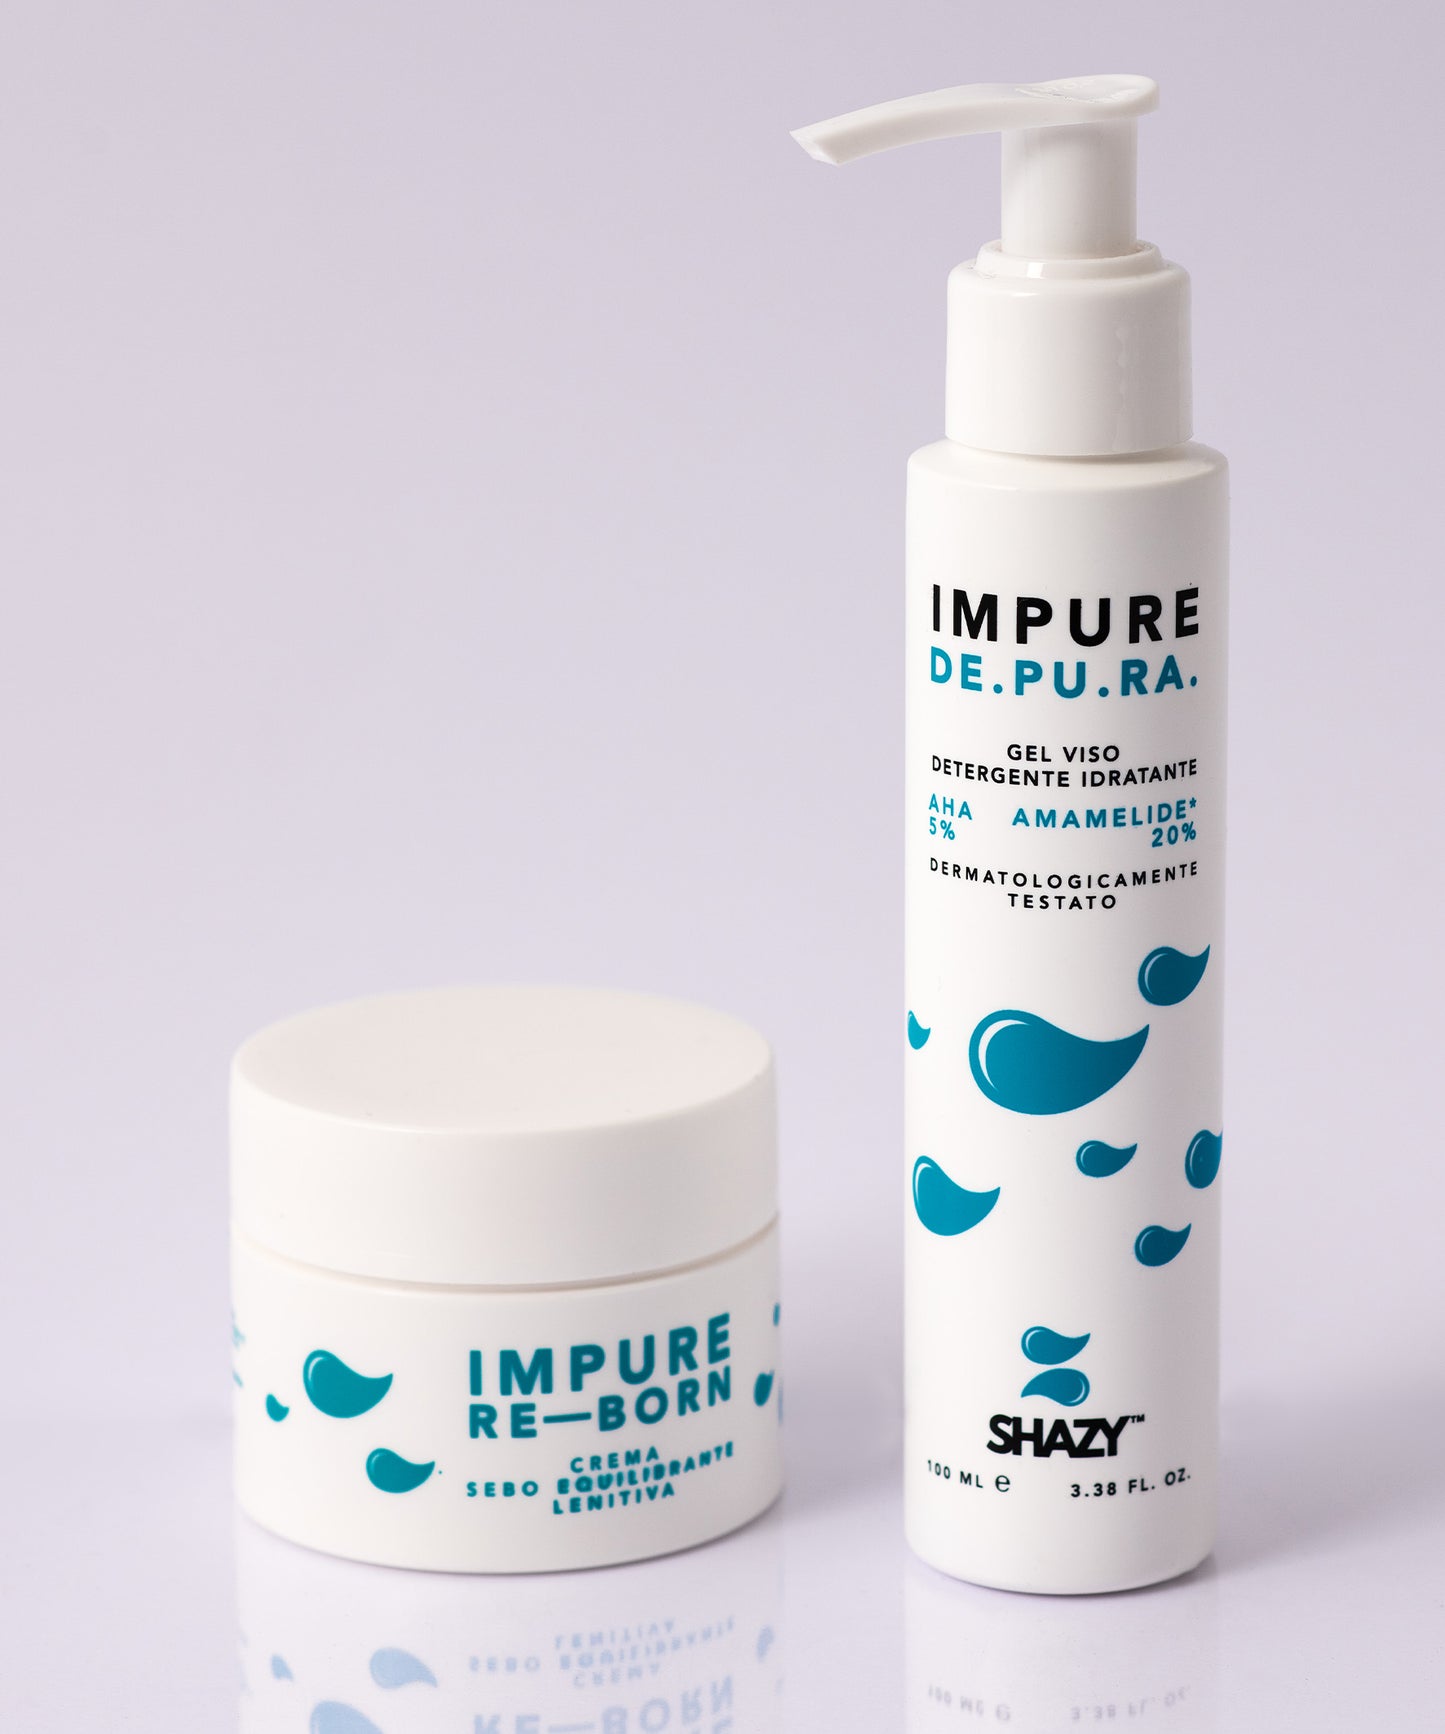 IMPURE DE gel facial cleanser set. PU . RA. 100ml + RE—BORN face cream 50ml